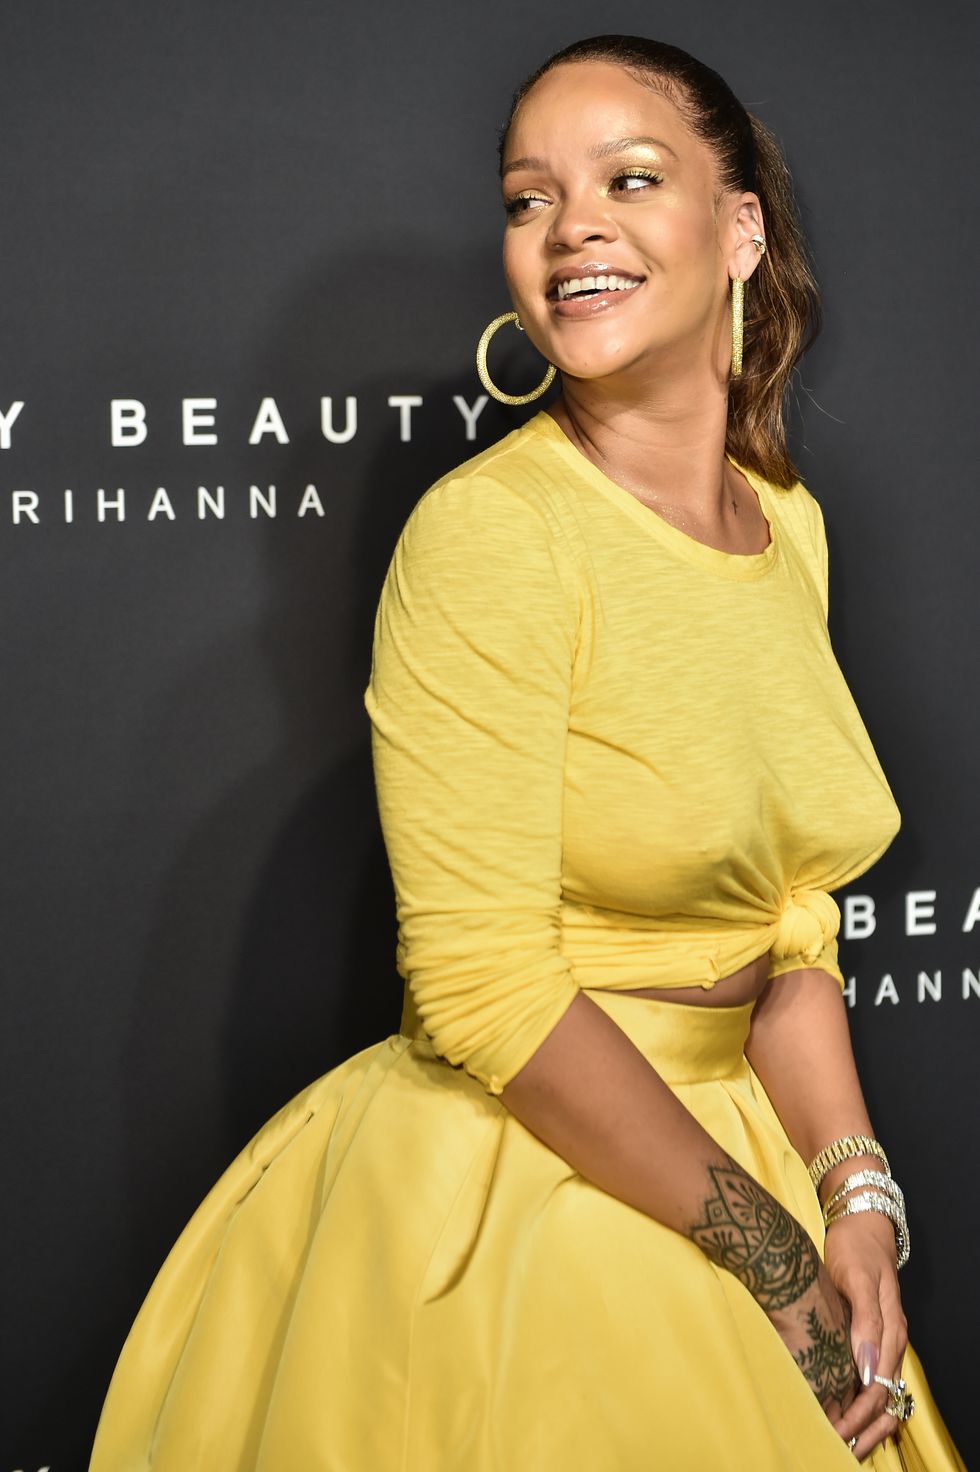 THE BROOKLYN BOROUGH OF NEW YORK CITY, NY - SEPTEMBER 07: Rihanna attends Fenty Beauty by Rihanna Launch Party on September 7, 2017 in the Brooklyn borough of New York City, New York.  (Photo by Steven Ferdman/Patrick McMullan via Getty Images)